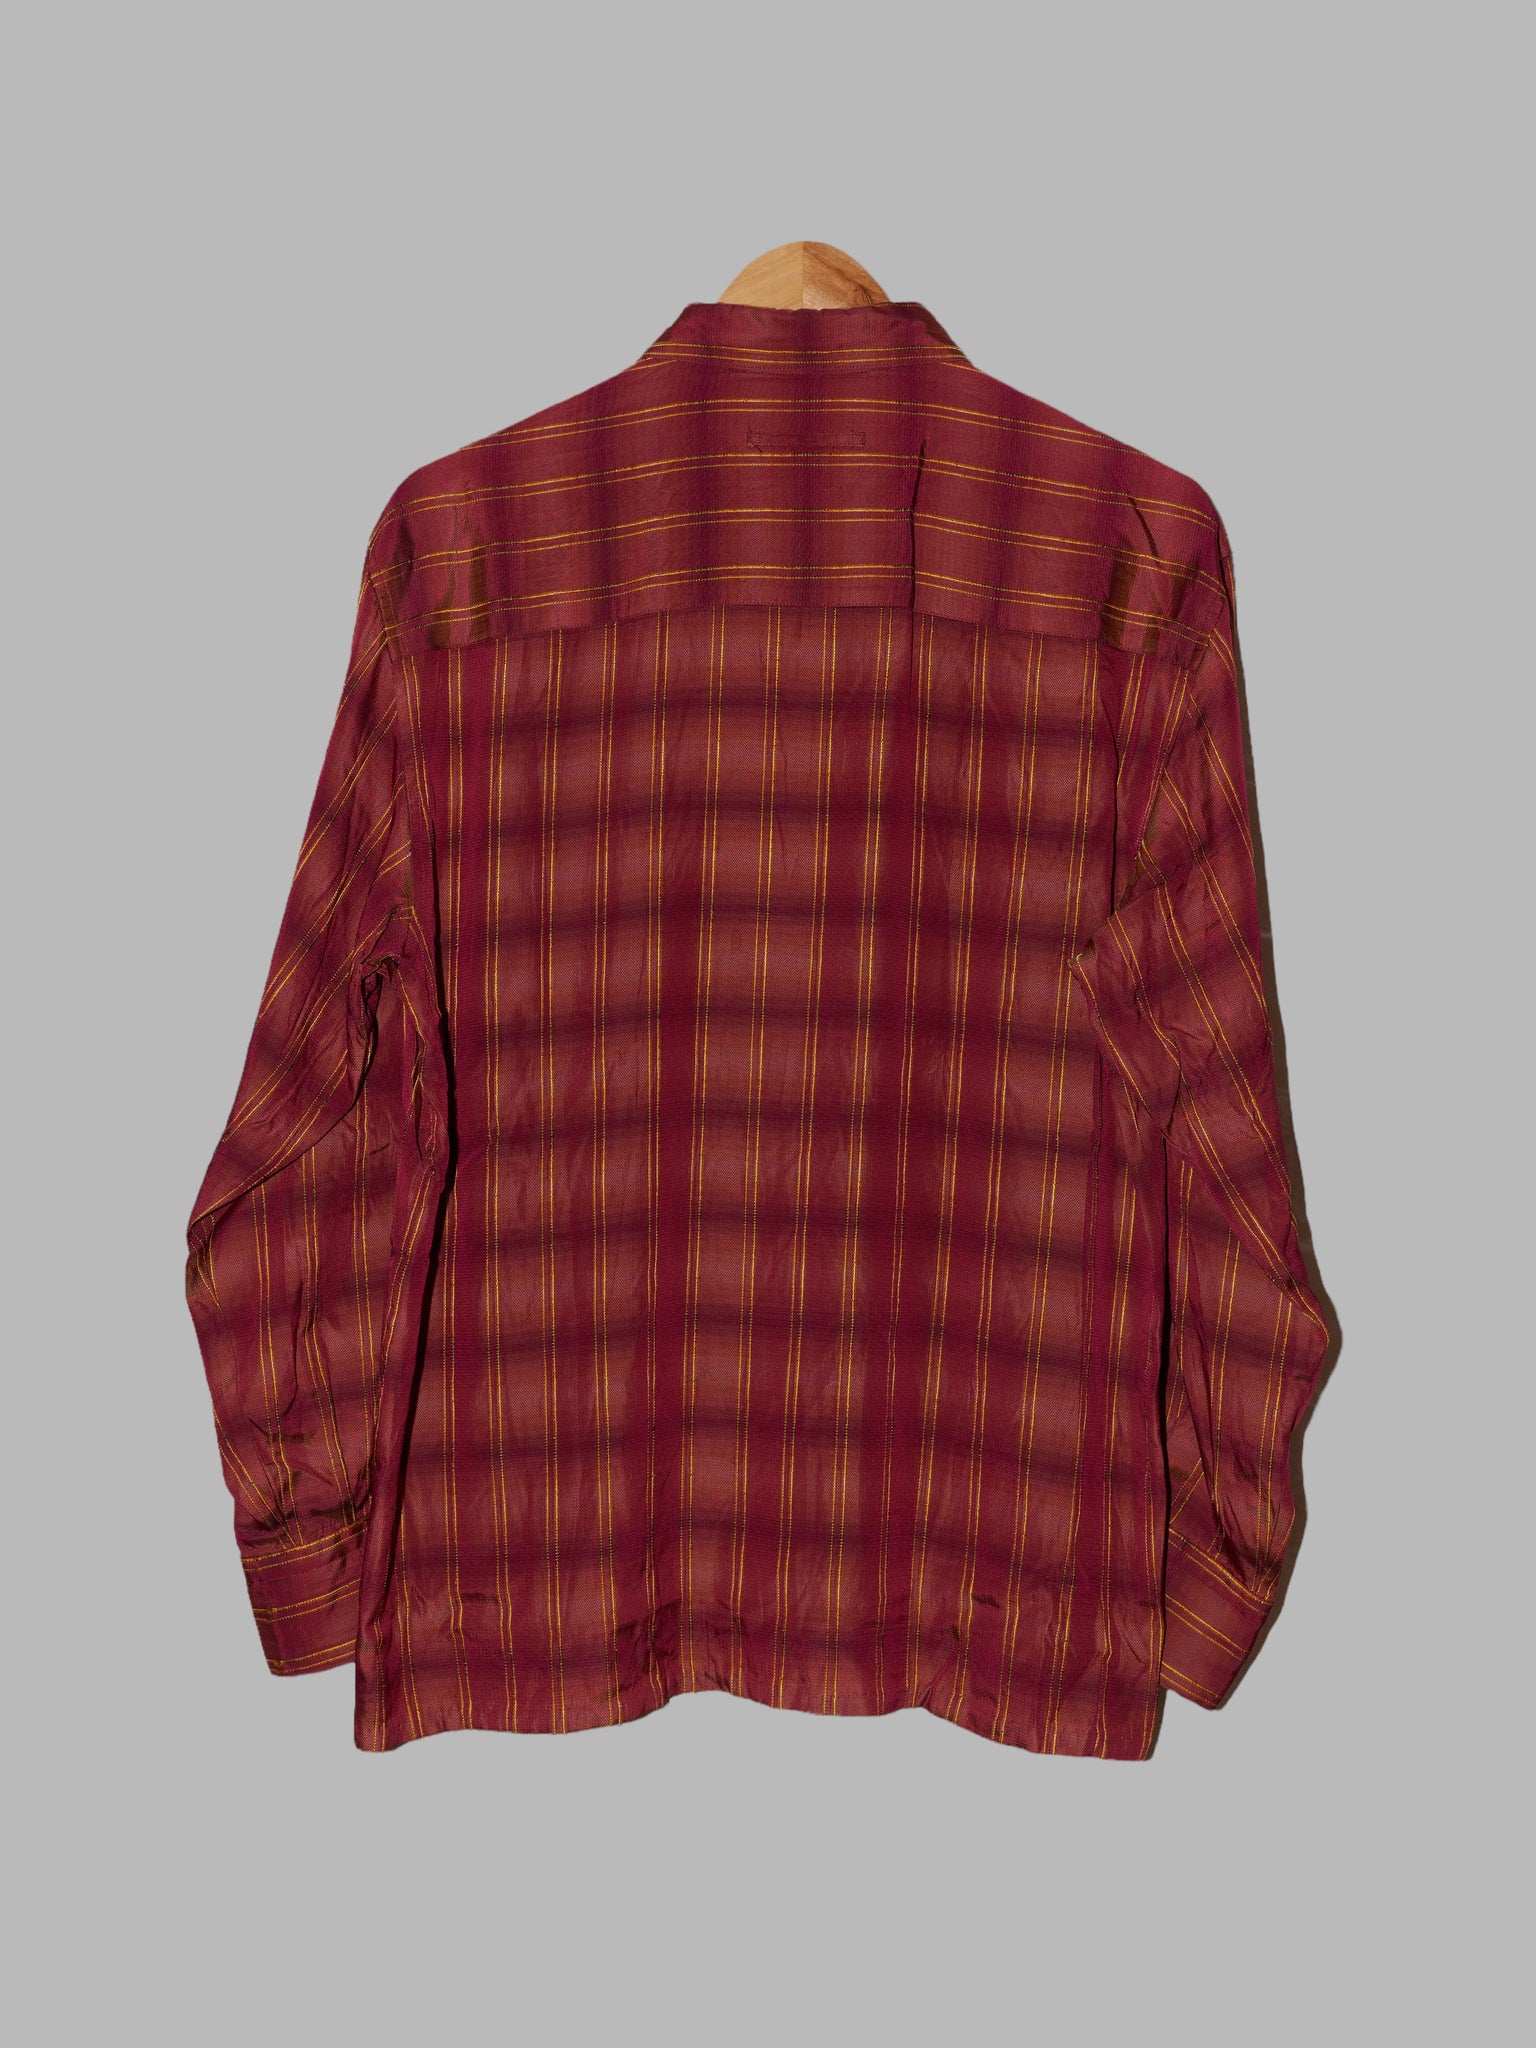 Jean Paul Gaultier Homme 1990s sheeny red orange stripe creased shirt - size 48